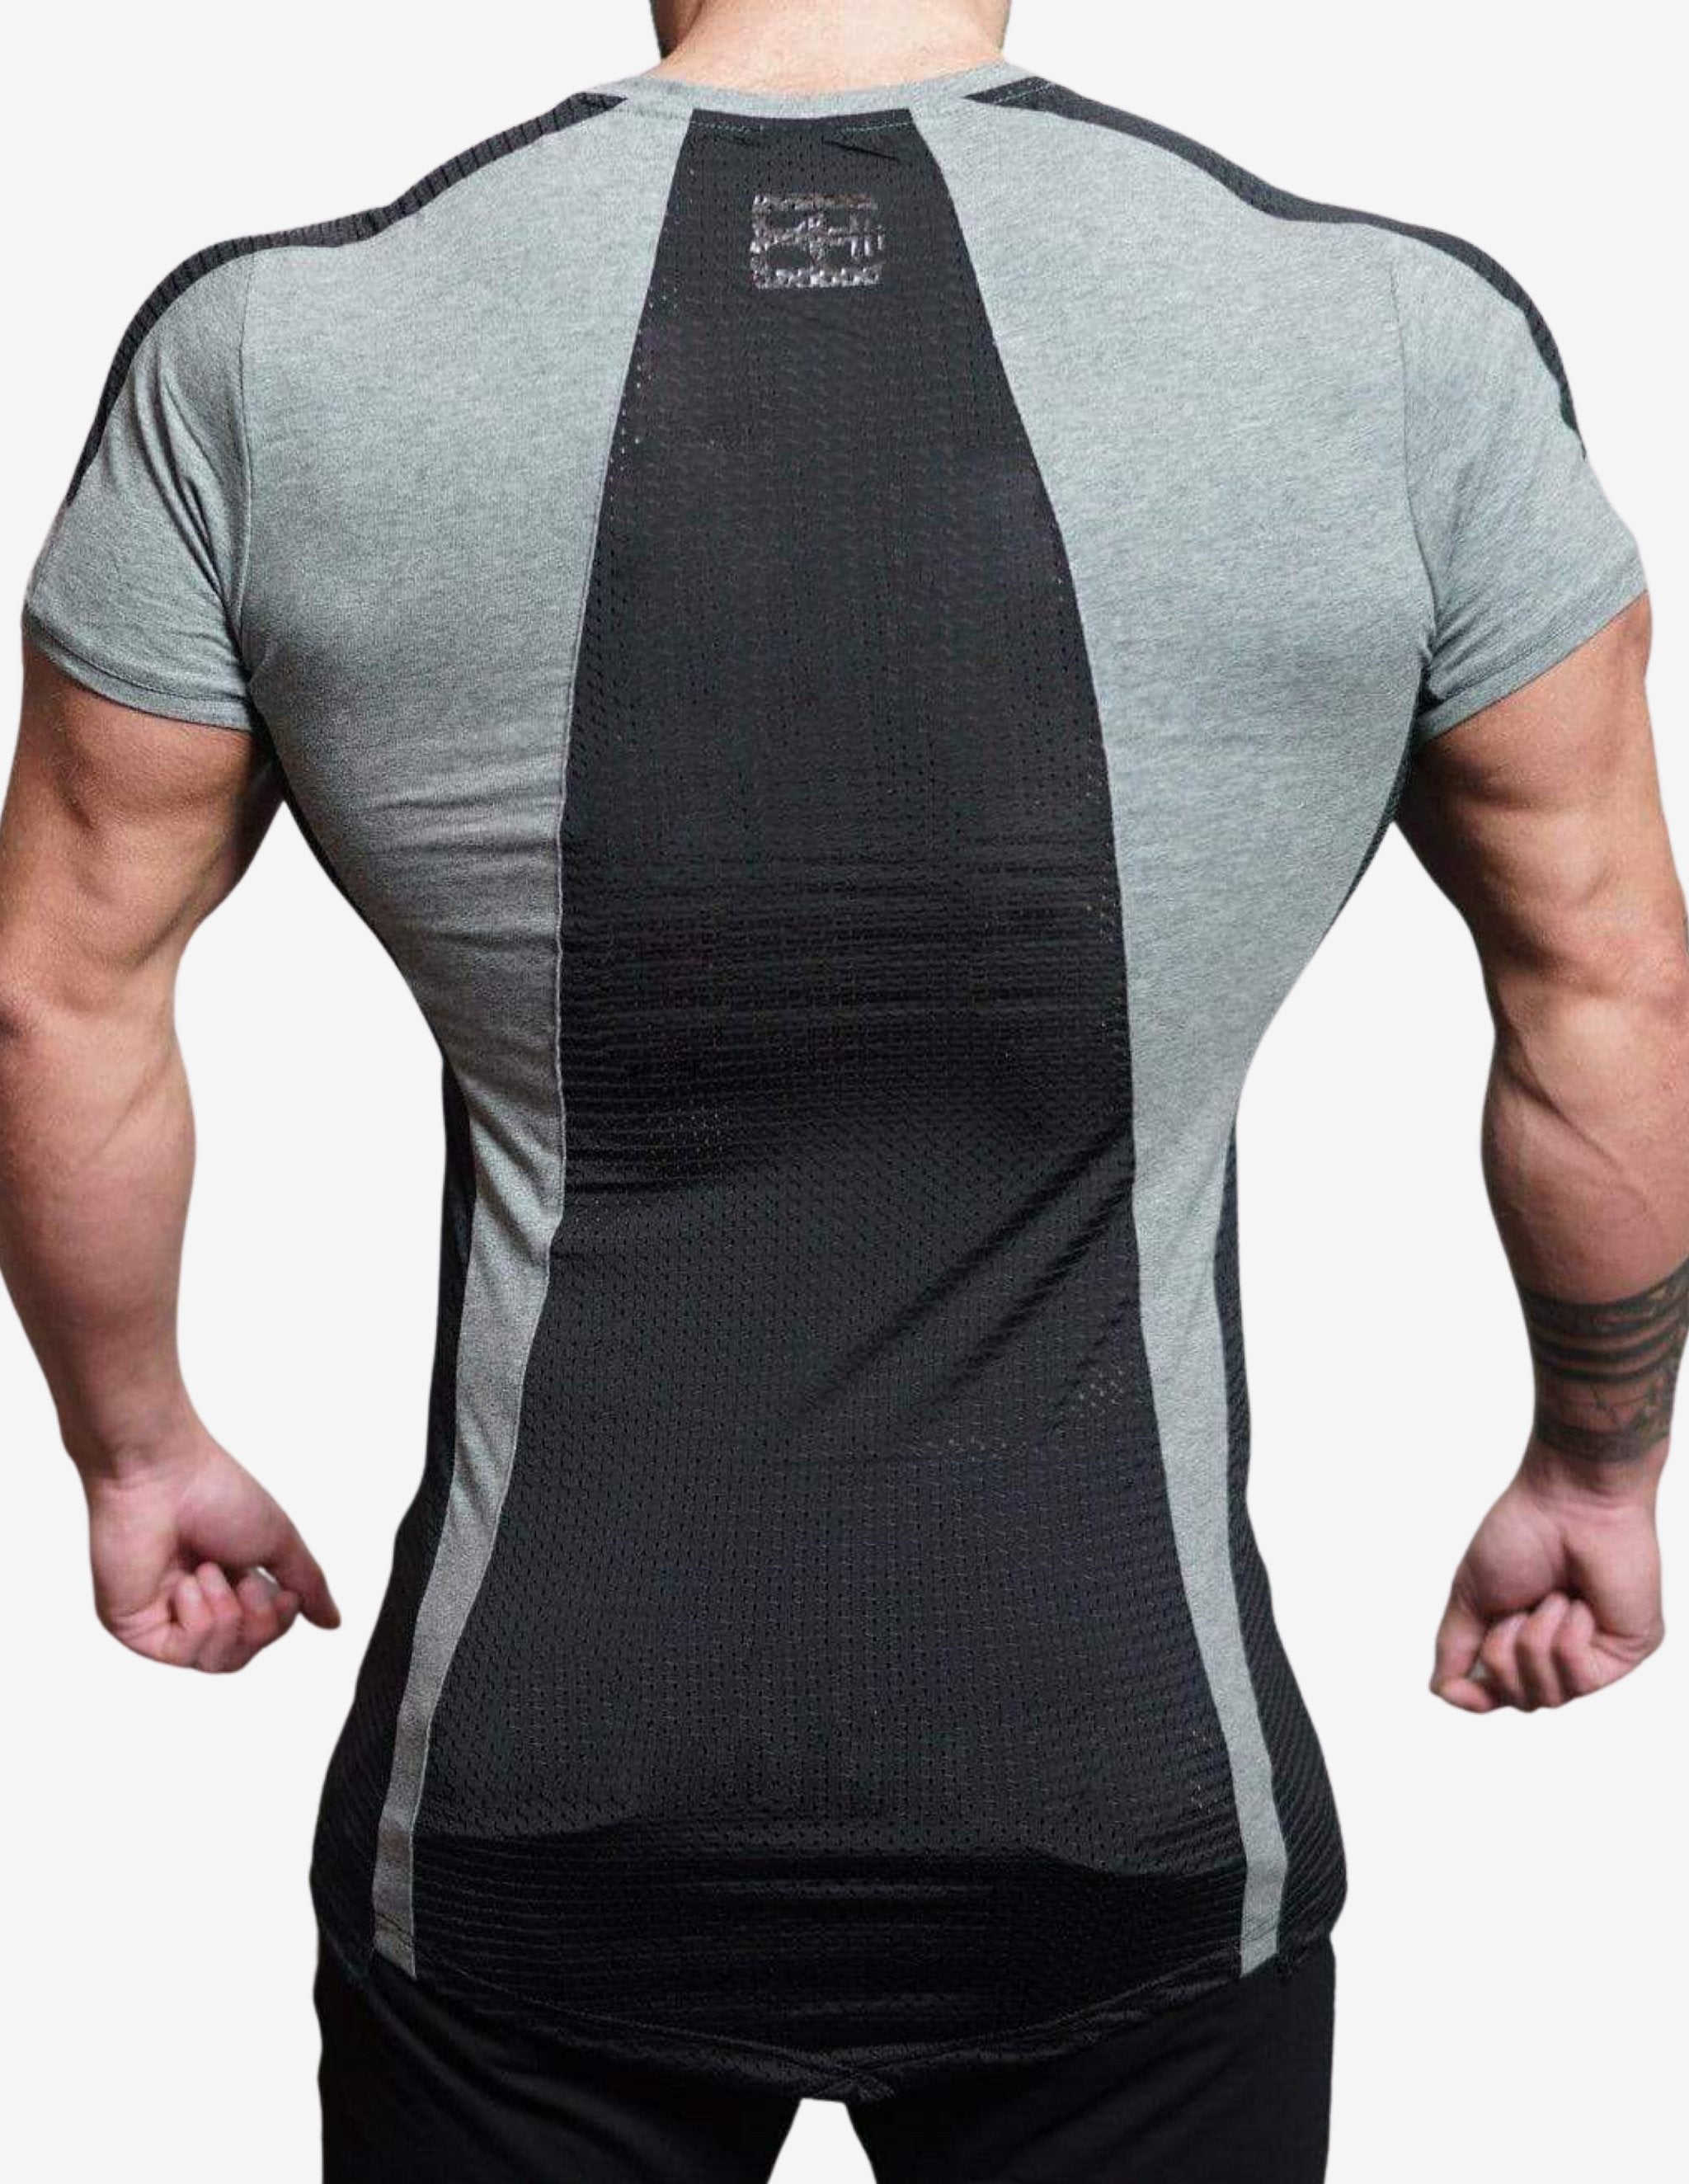 KANA Performance – Shirt Anthra Black-T-shirt Man-Body Engineers-Guru Muscle